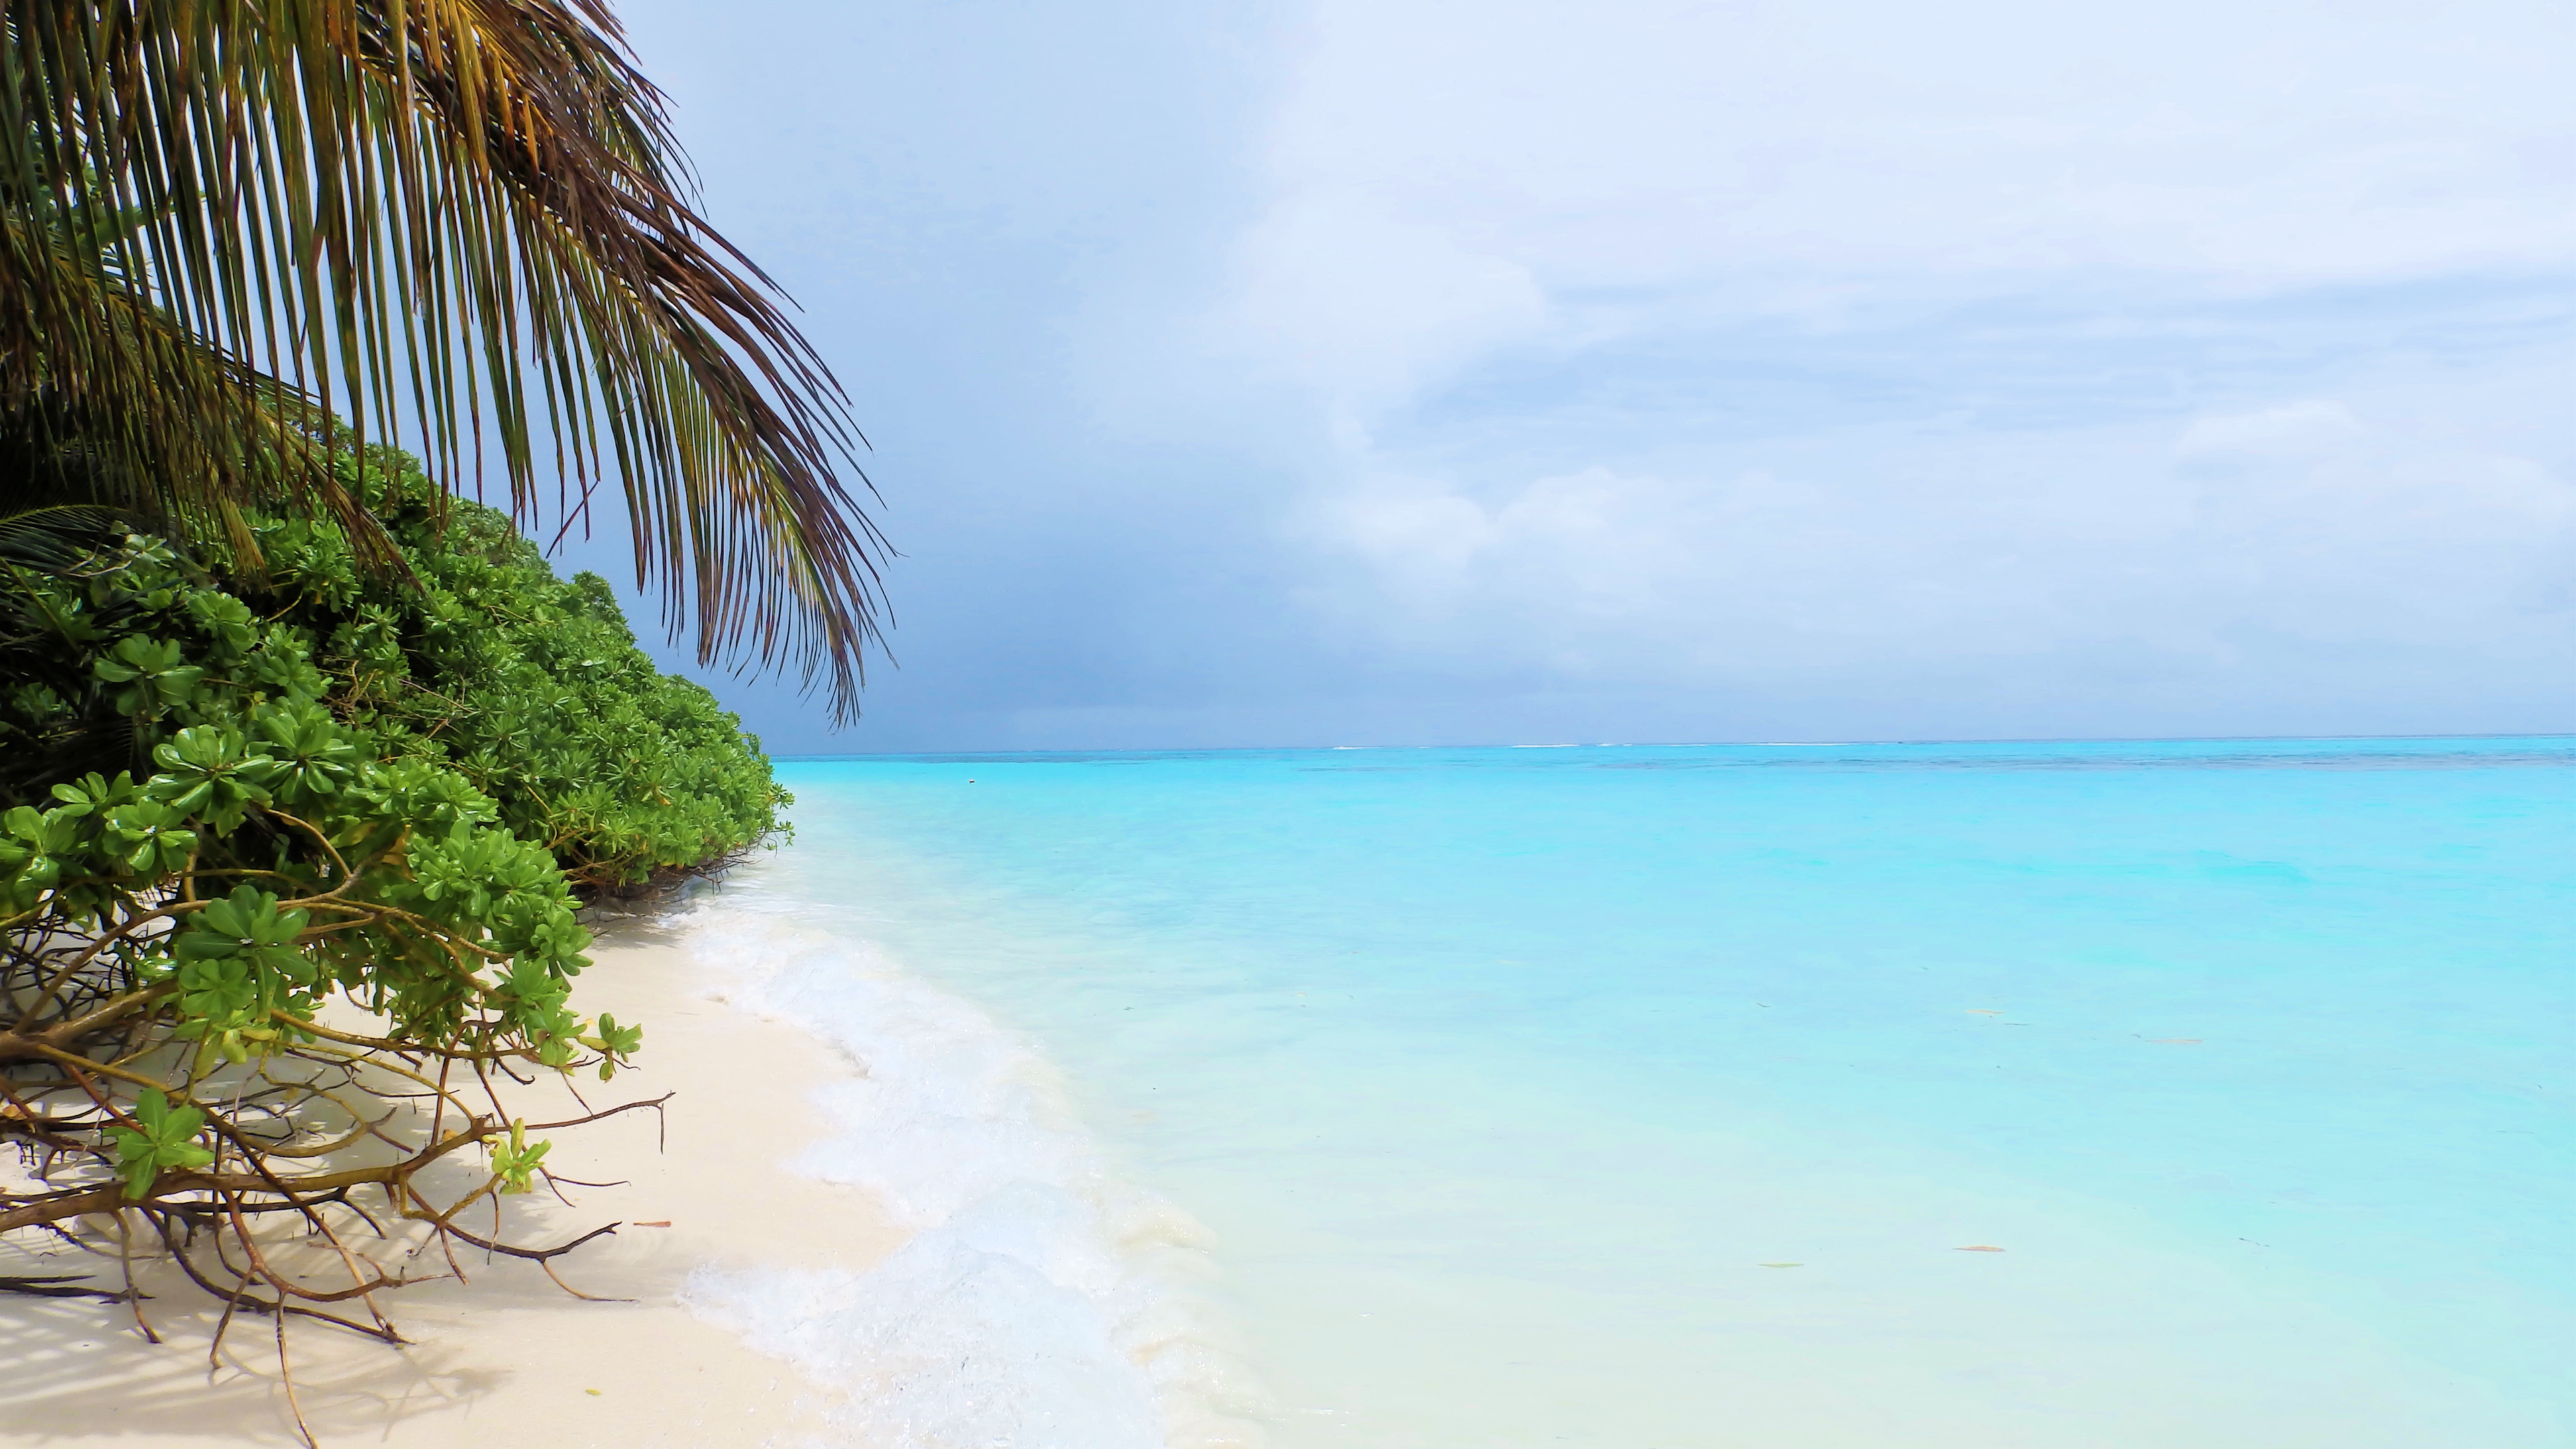 The island, Mystical beauty, Hidden paradise, Remote tranquility, 3840x2160 4K Desktop